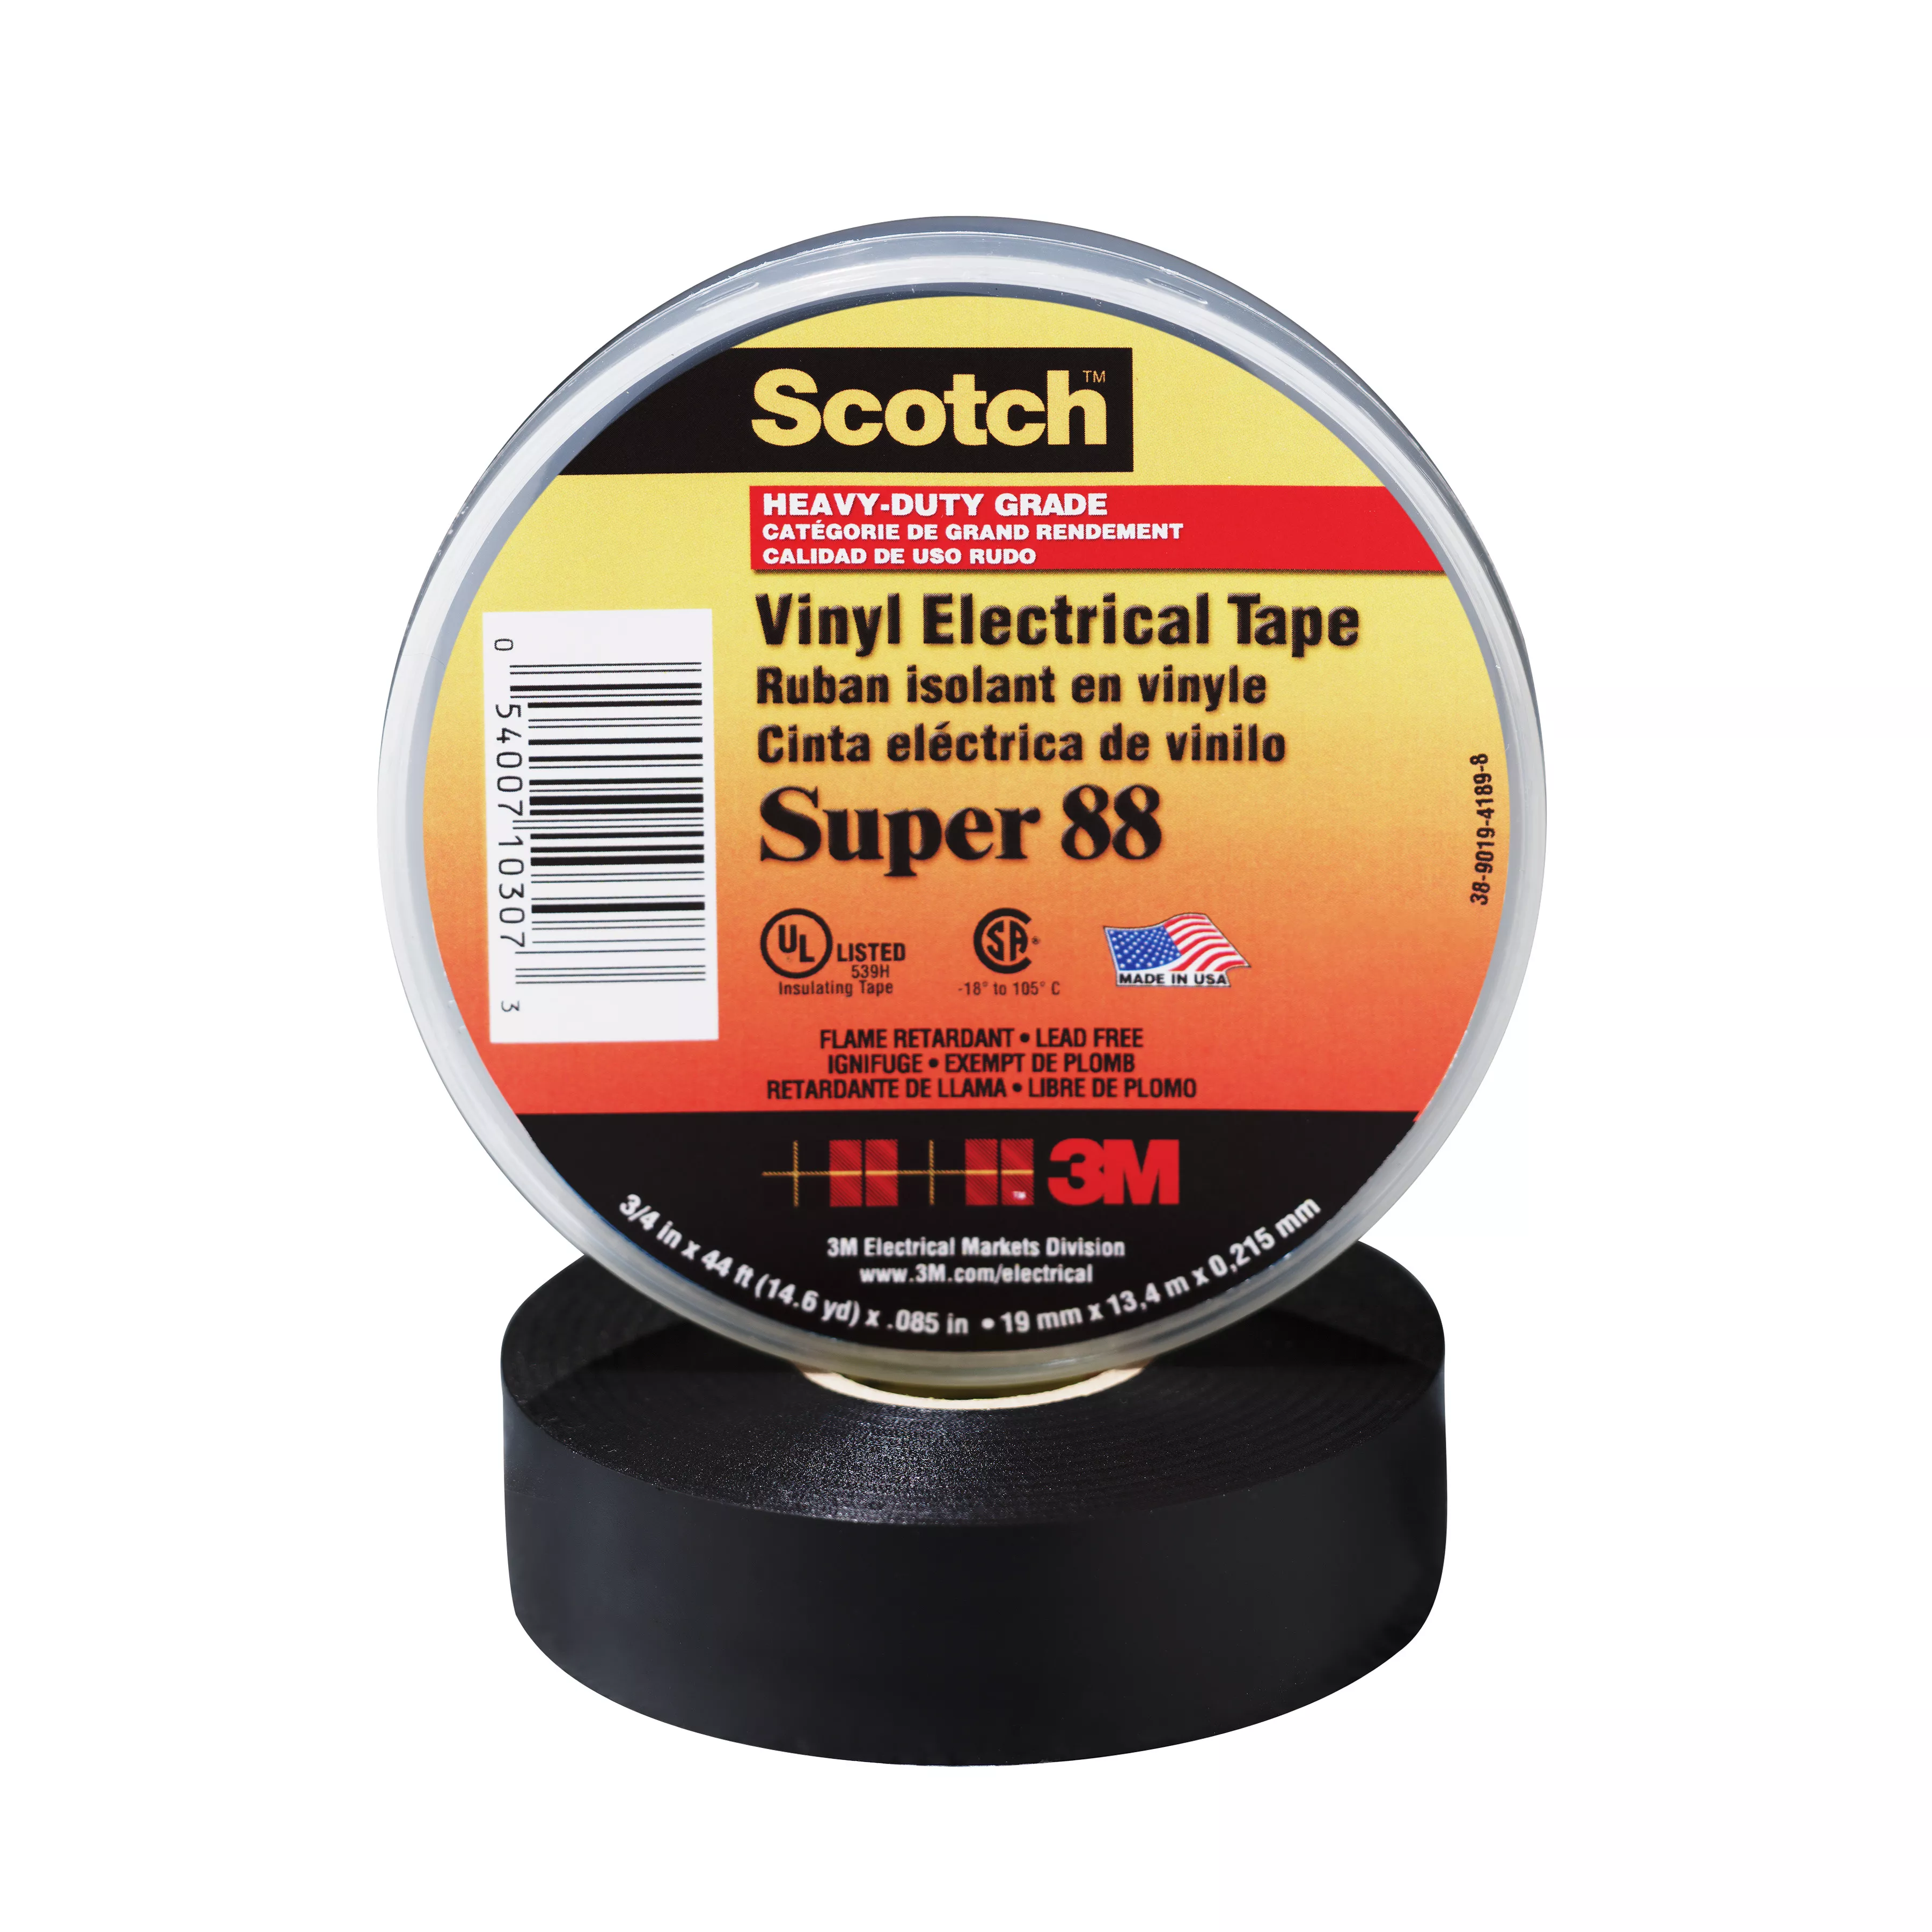 Scotch® Vinyl Electrical Tape Super 88, 3/4 in x 44 ft, Black, 10
rolls/carton, 100 rolls/Case